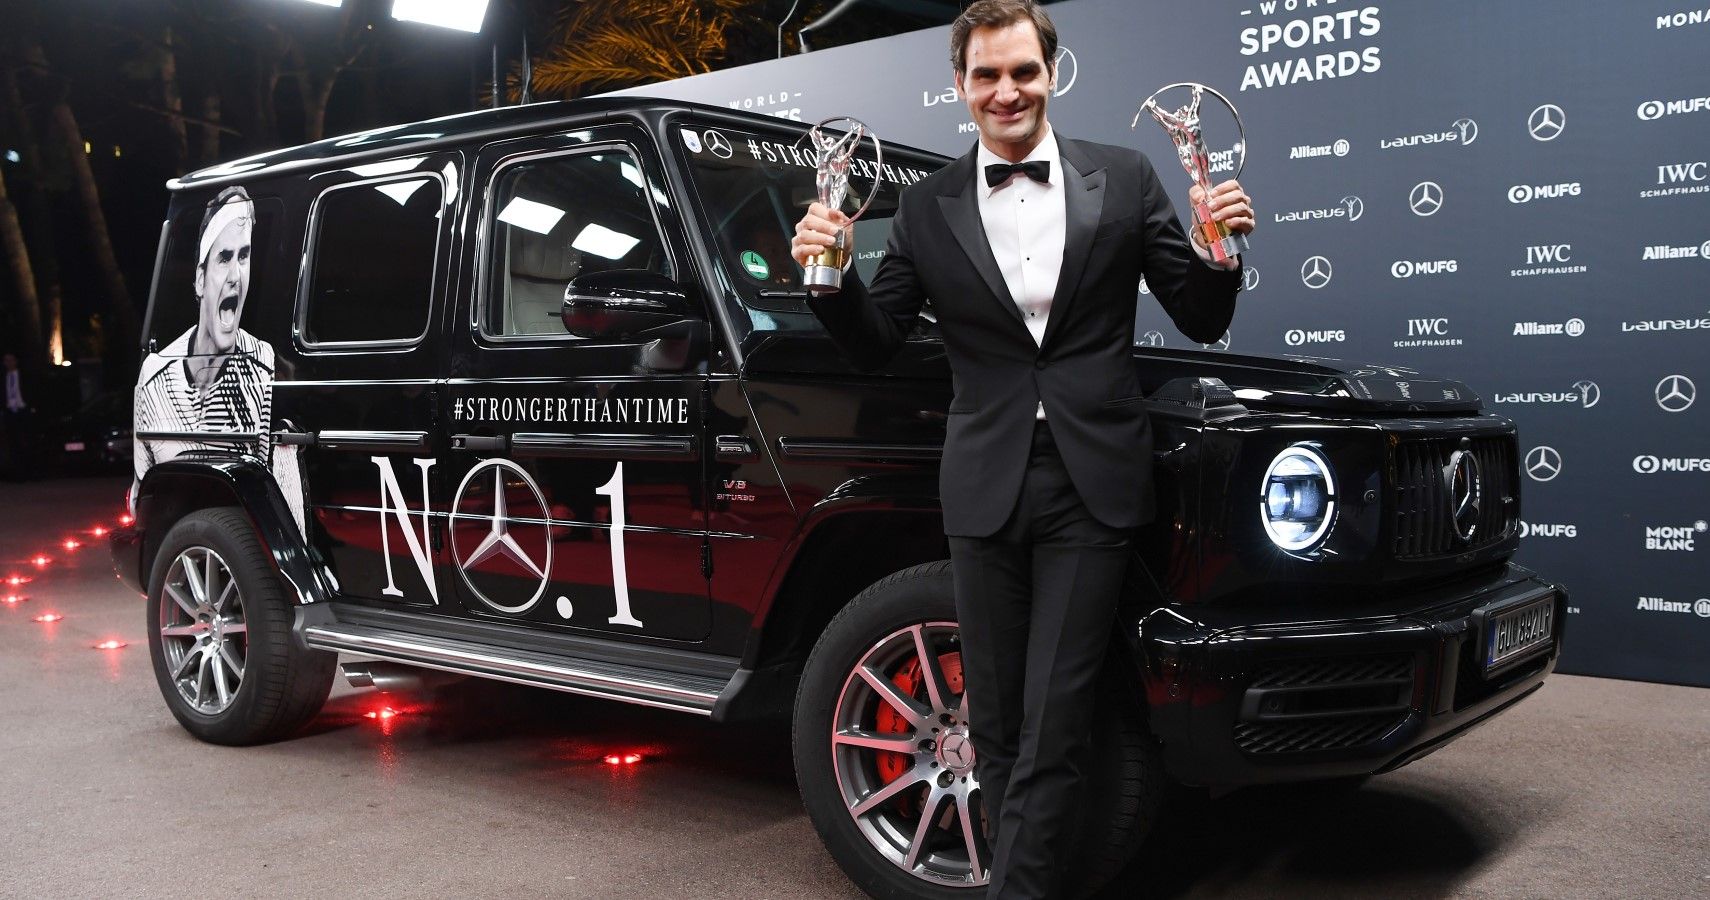 Roger Federer with the Mercedes-AMG G63